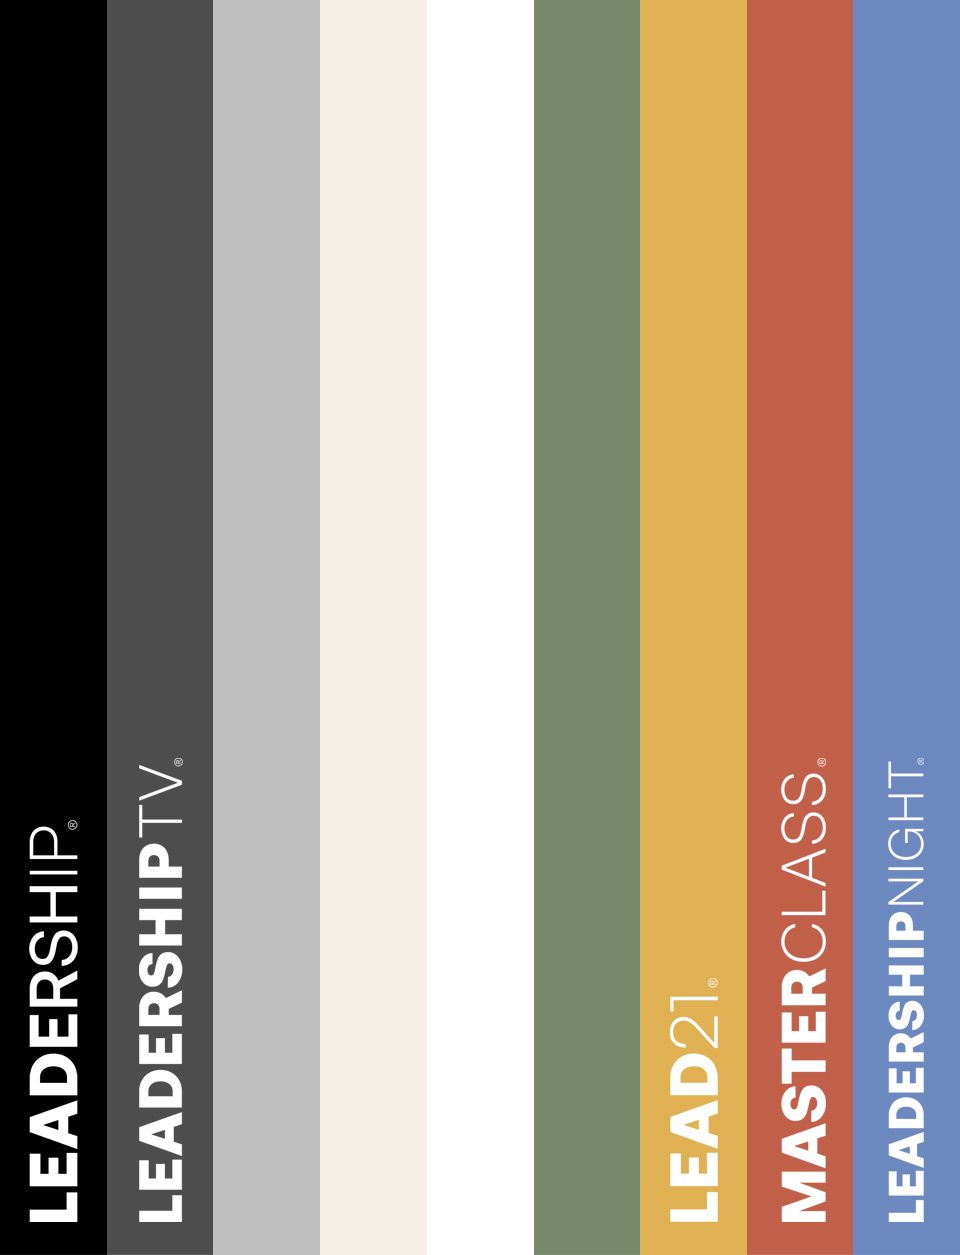 About-Emotions_Designagentur-Recklinghausen_Global-Leadership_Gerald-Huesch_Case_Colors.jpg